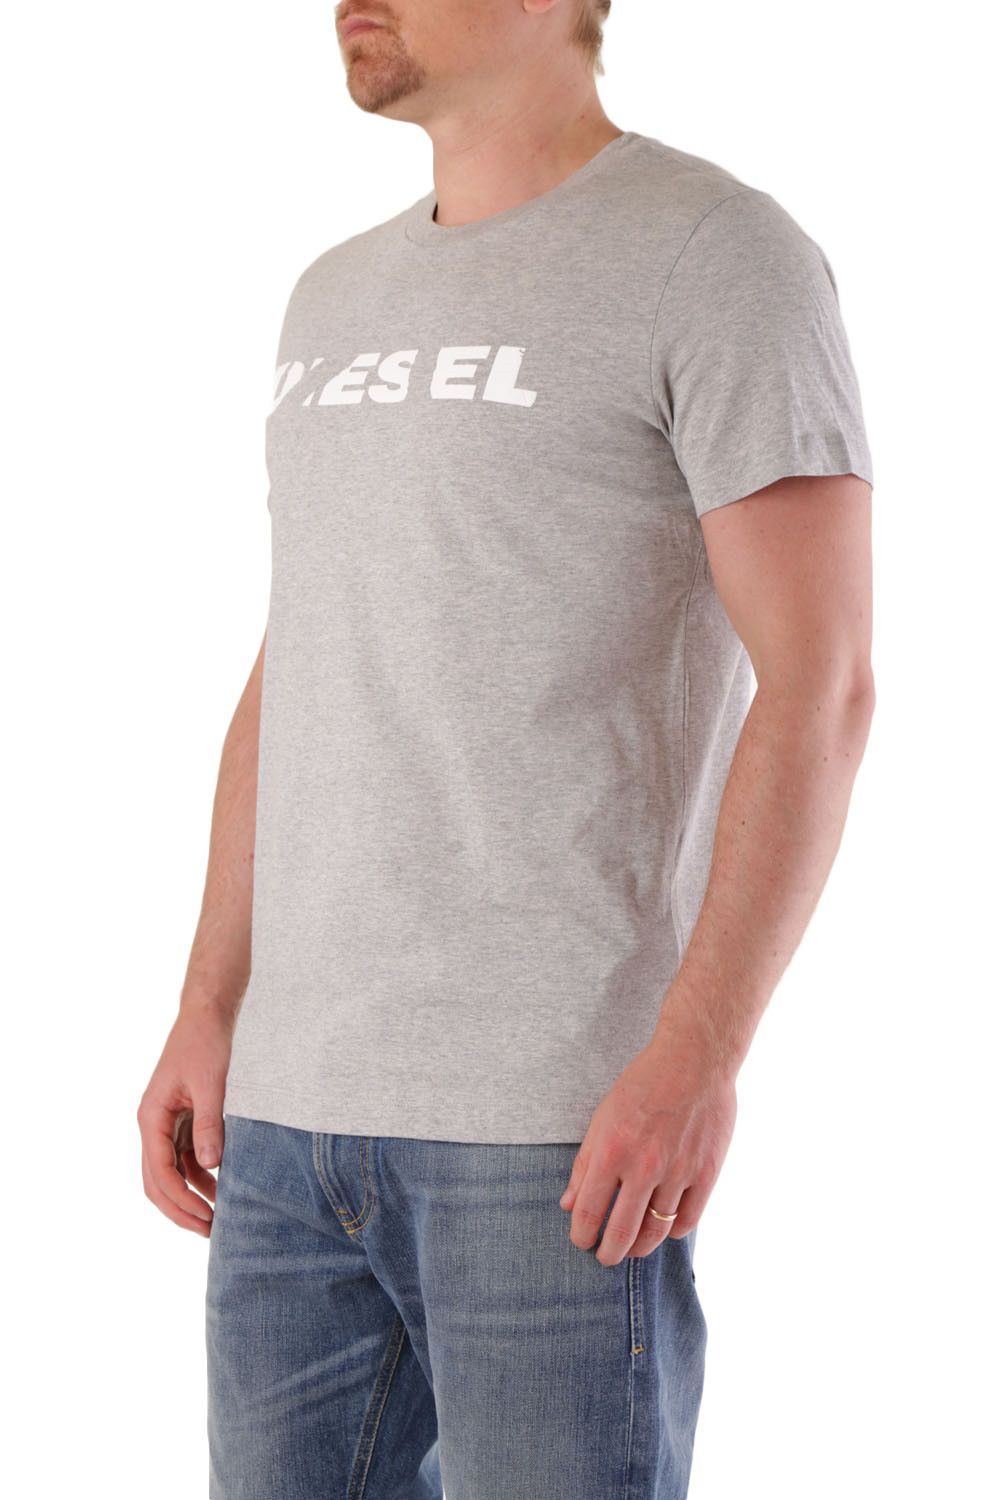 Brand: Diesel   Gender: Men   Type: T-shirts   Color: Grey   Pattern: Print   Neckline: Round Neck   Sleeves: Short Sleeve   Season: Spring/summer